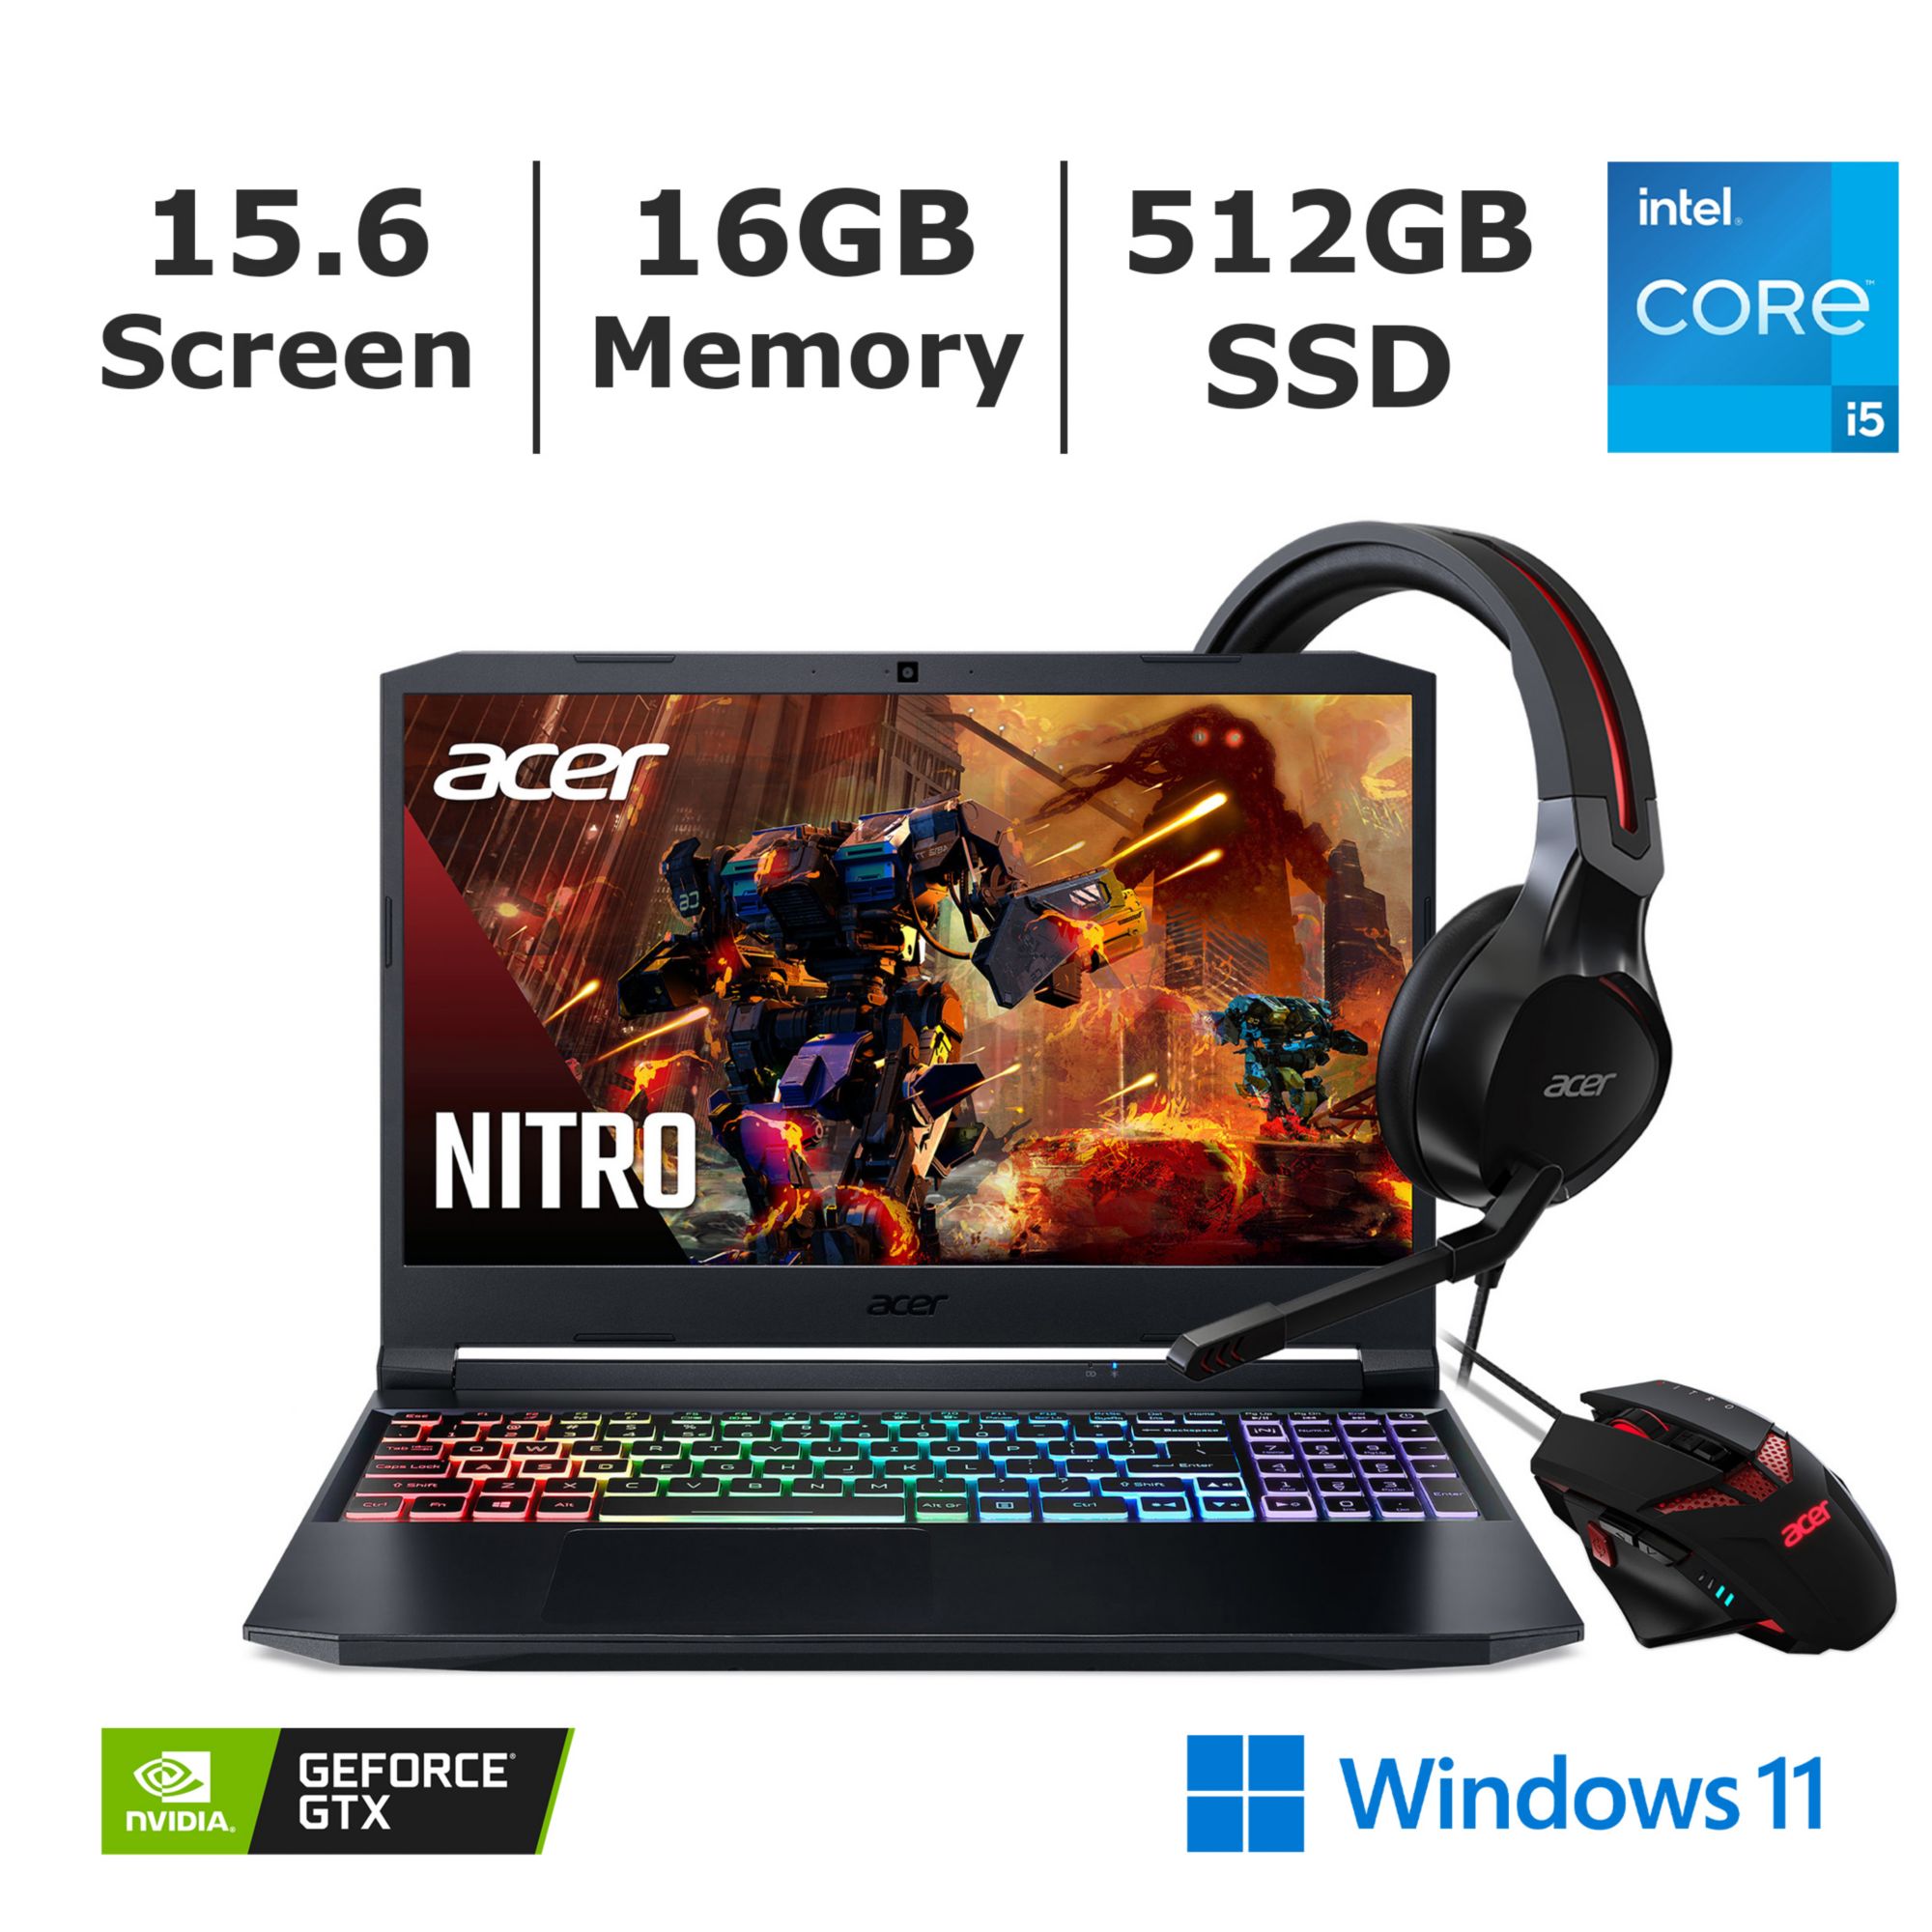 Acer Nitro 5 , 15.6 Full HD IPS 144Hz Display, 11th Gen Intel Core  i5-11400H, NVIDIA GeForce RTX 3050Ti Laptop GPU, 16GB DDR4, 512GB NVMe SSD